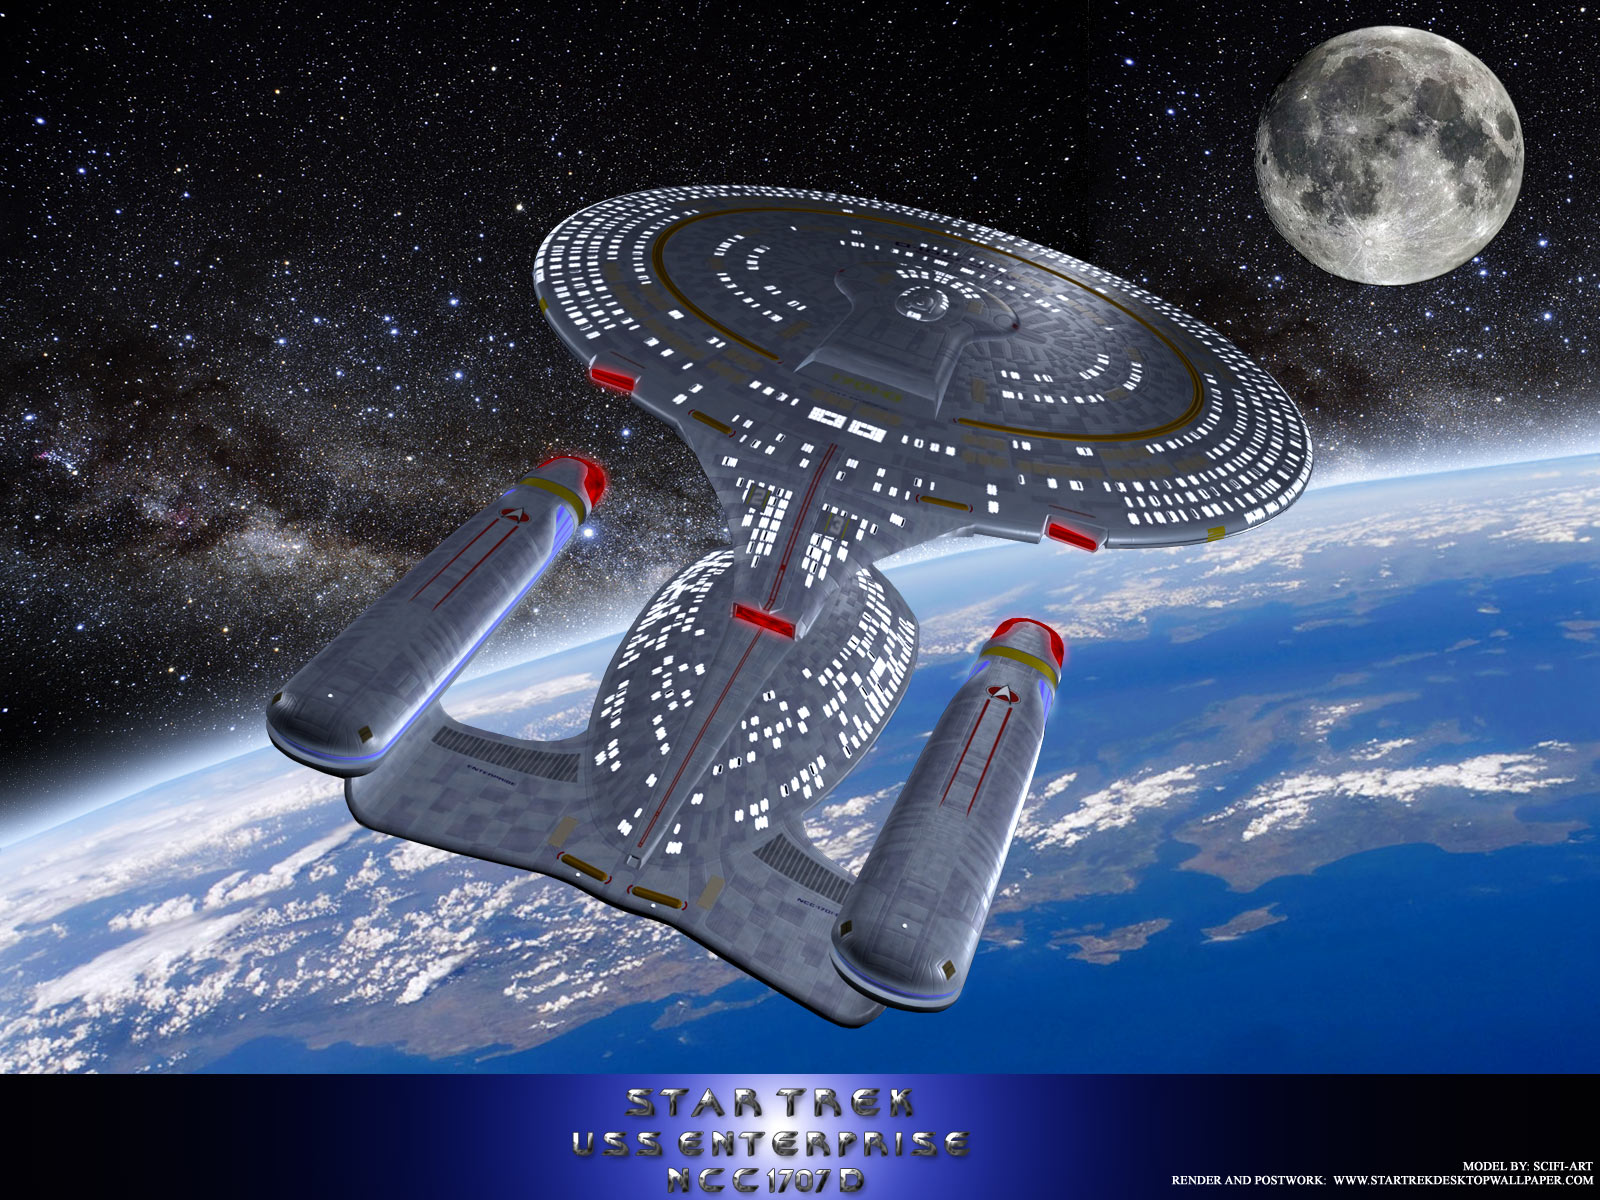 Star Trek Uss Enterprise Ncc1707d The Next Generation